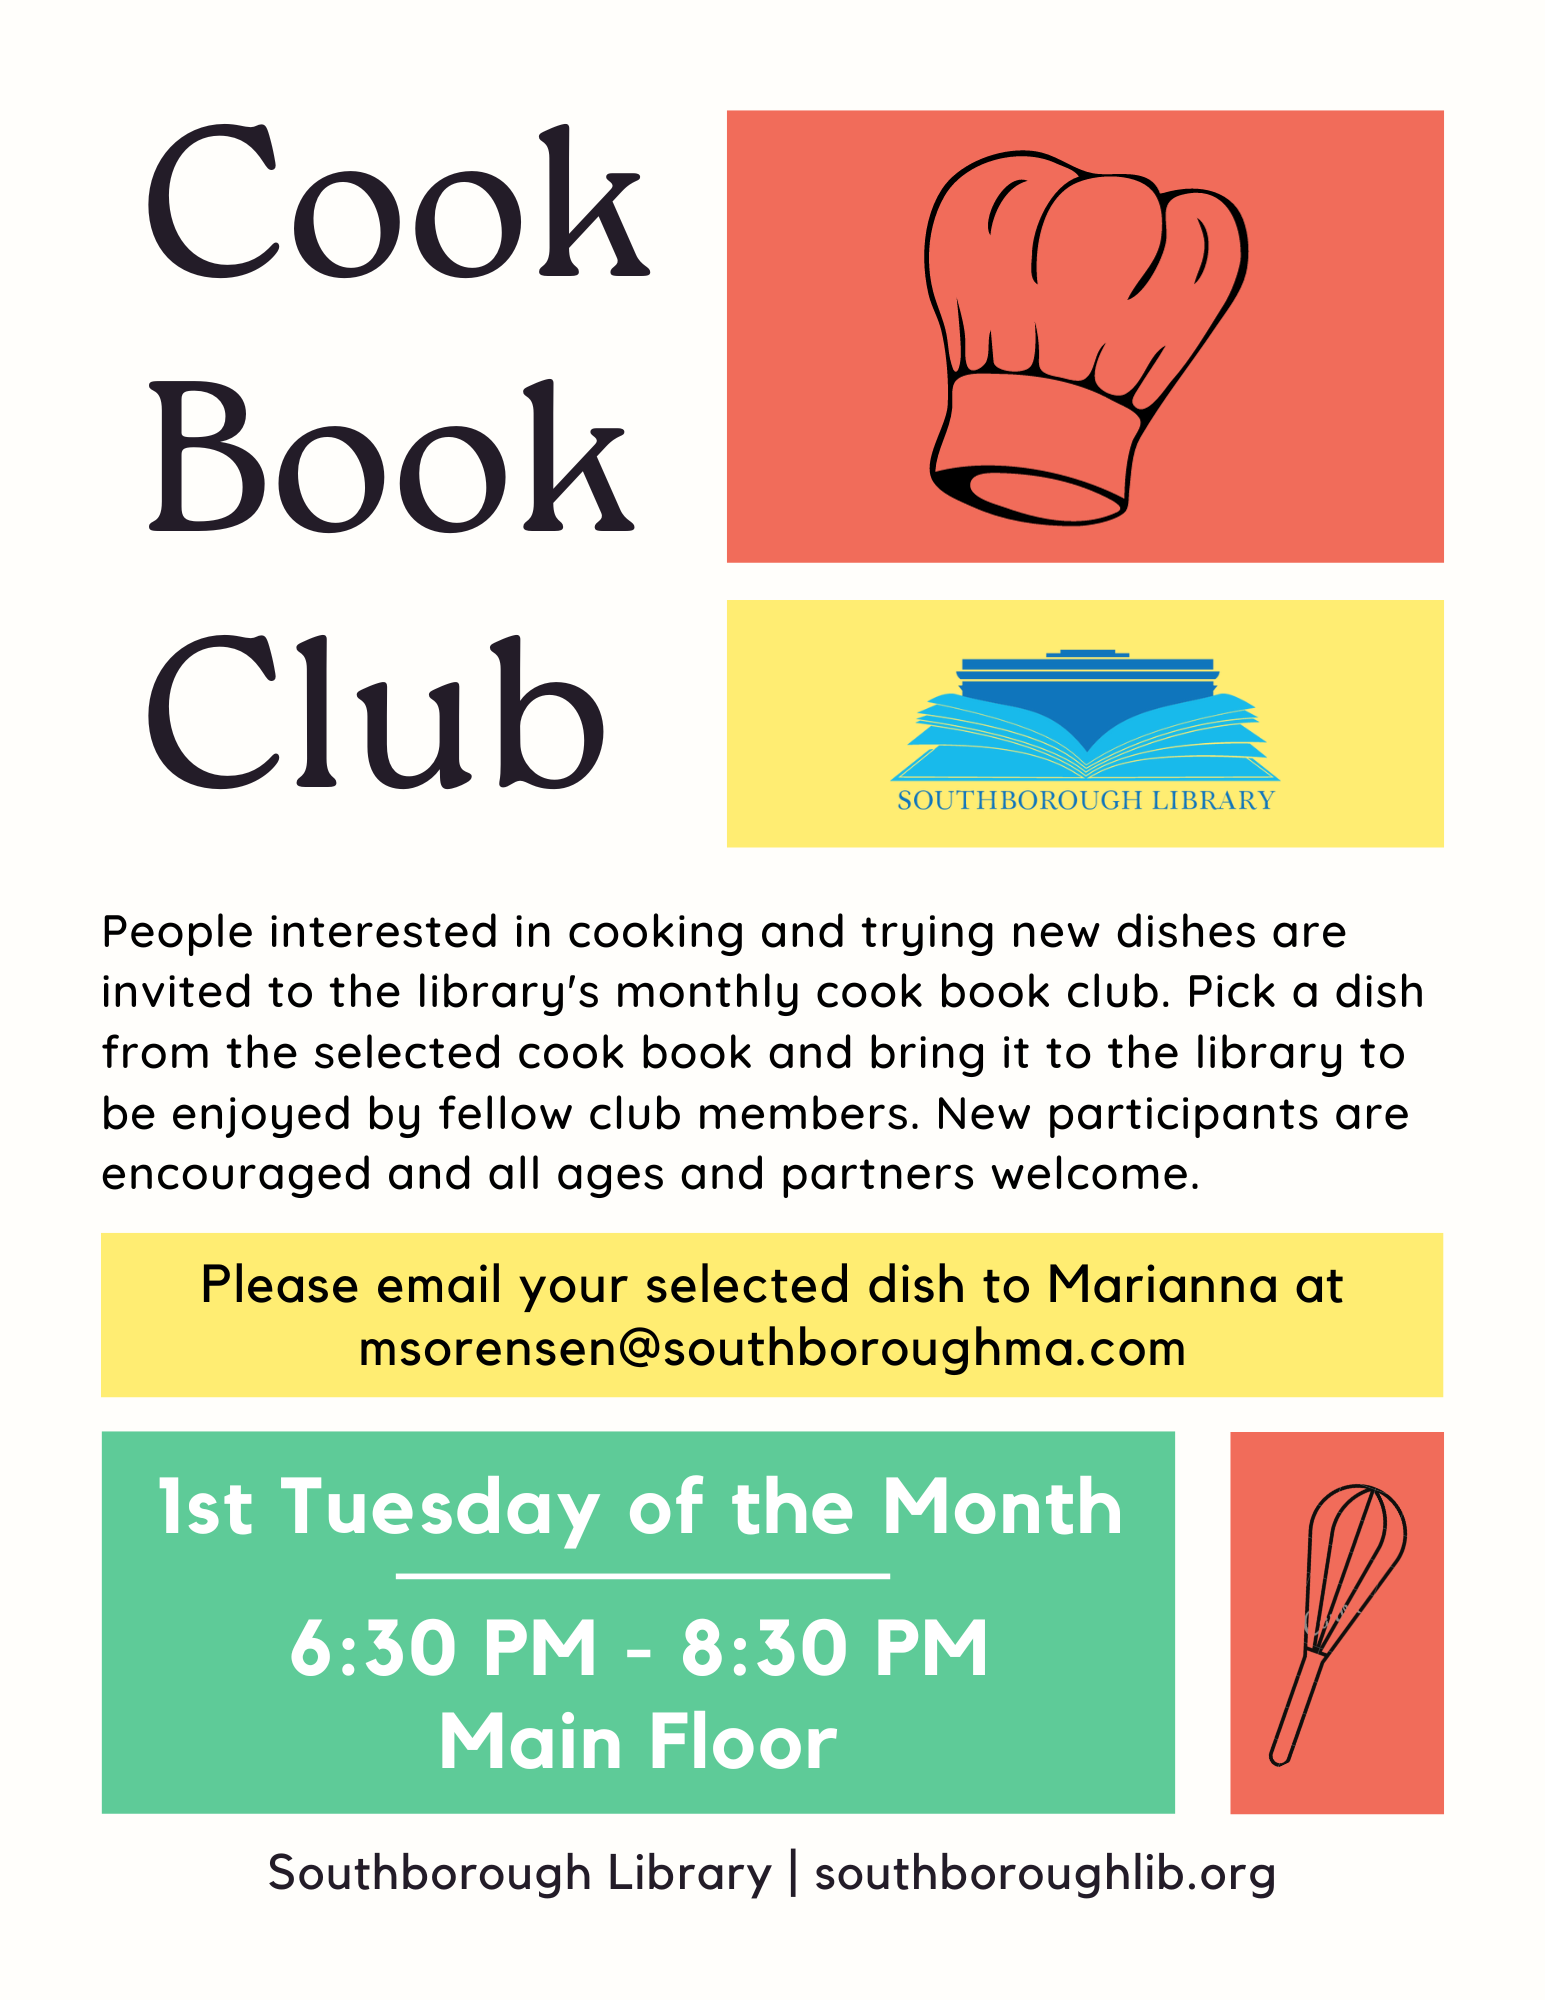 Cook Book Club flyer